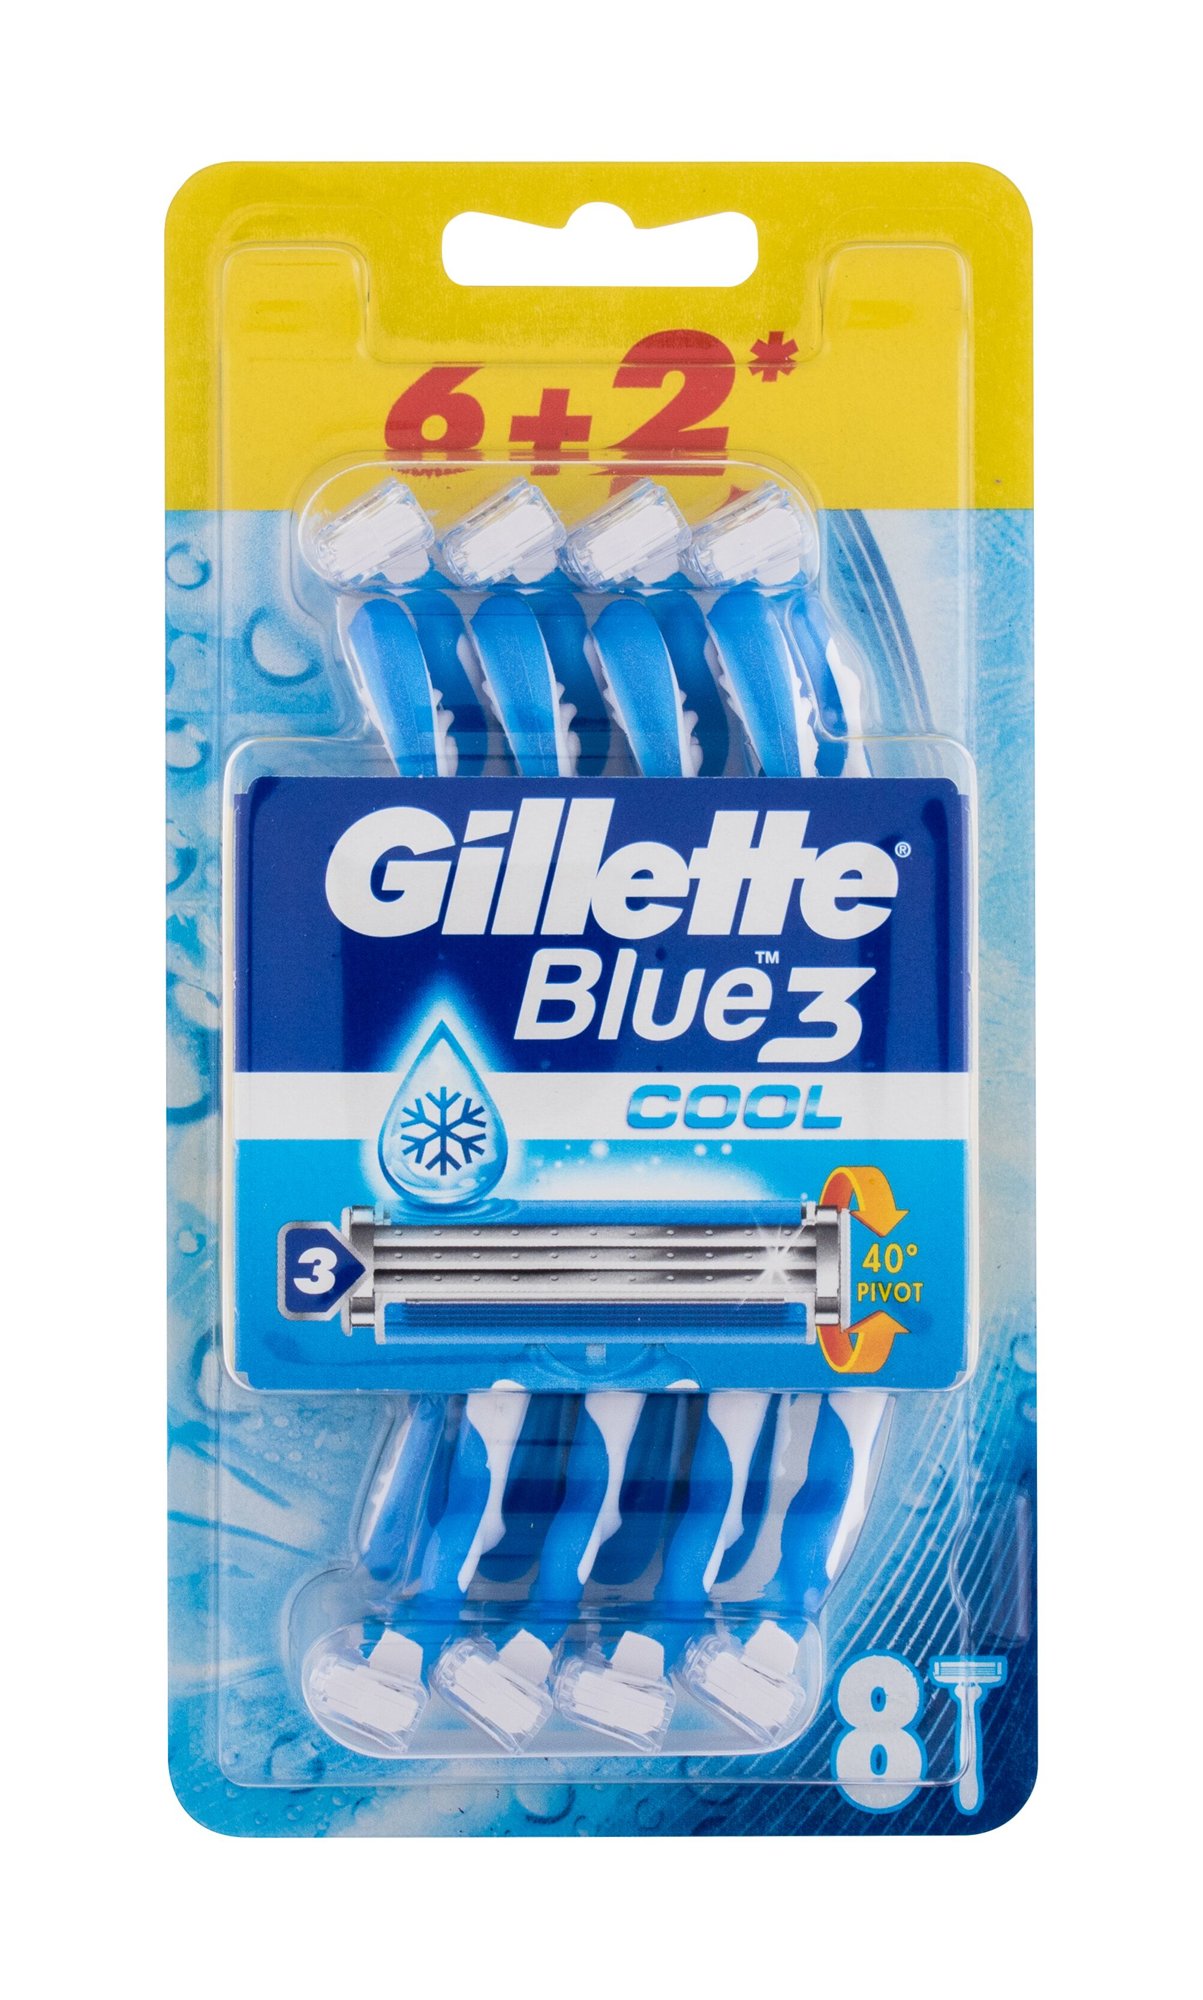 Gillette Blue3 Cool 8vnt skustuvas